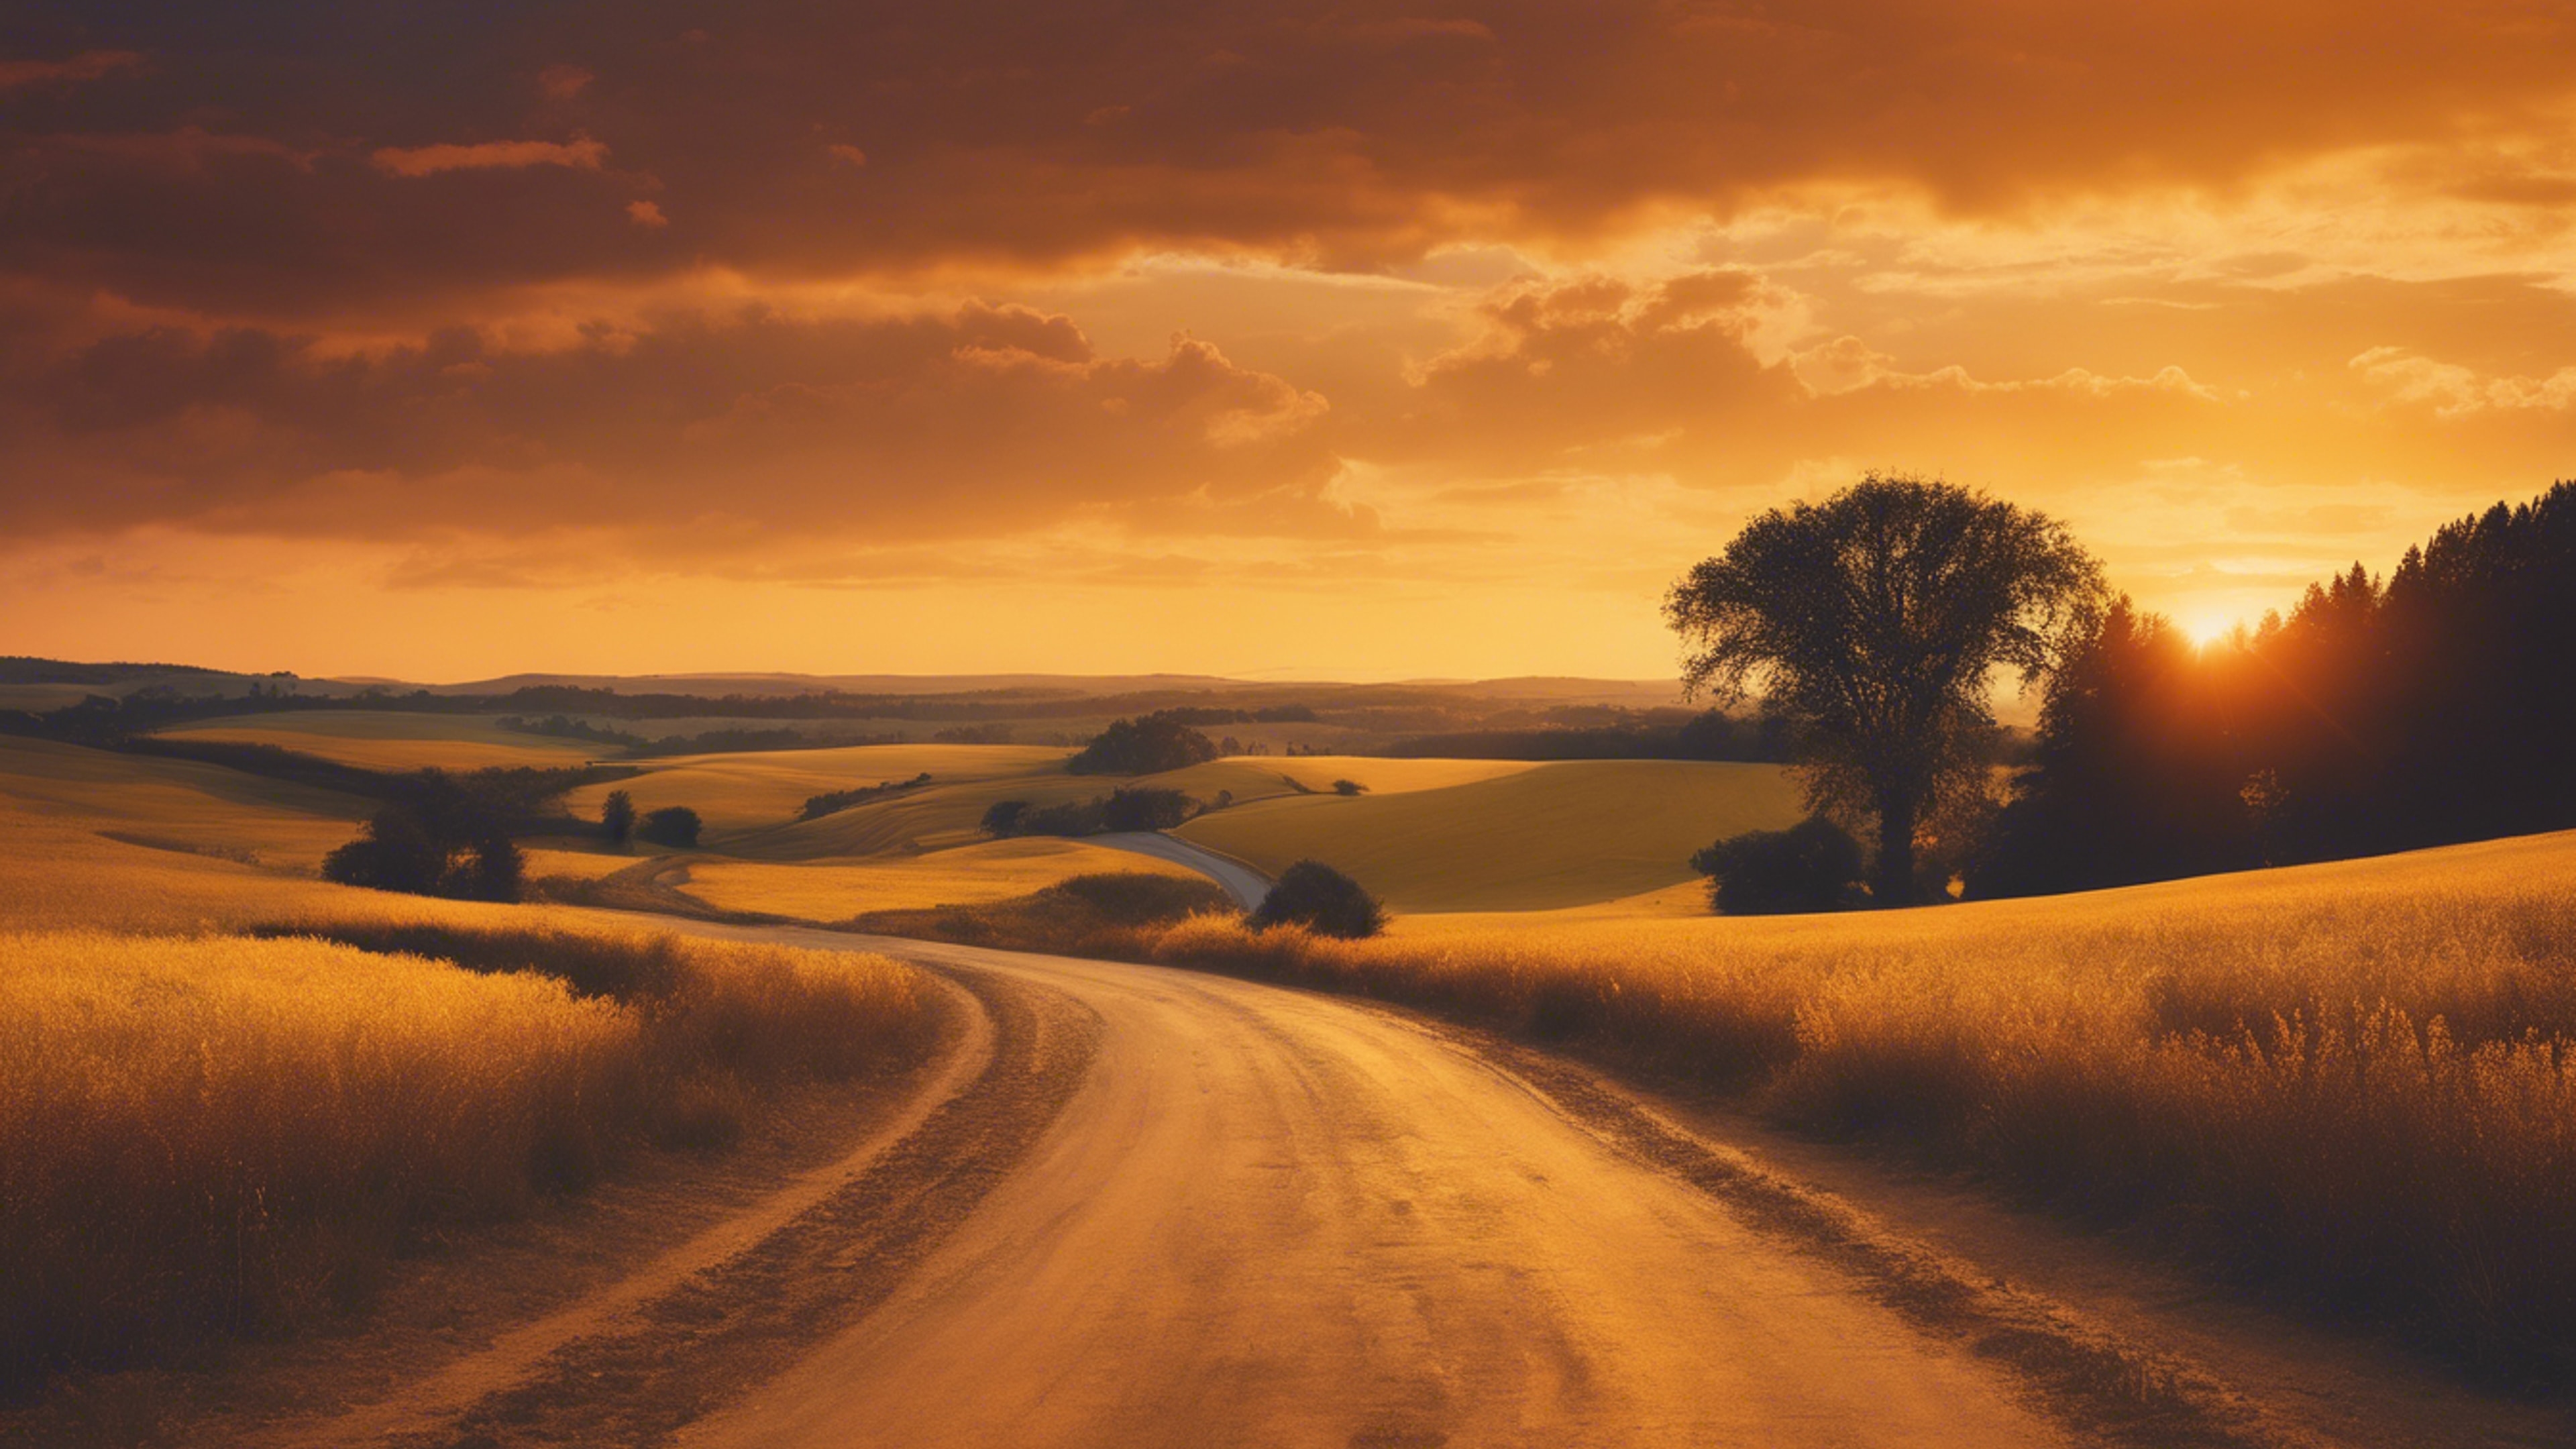 A winding road leading through golden fields under a vibrant, yellow-orange sunset. Wallpaper[40ed0f0dbc8340e48832]